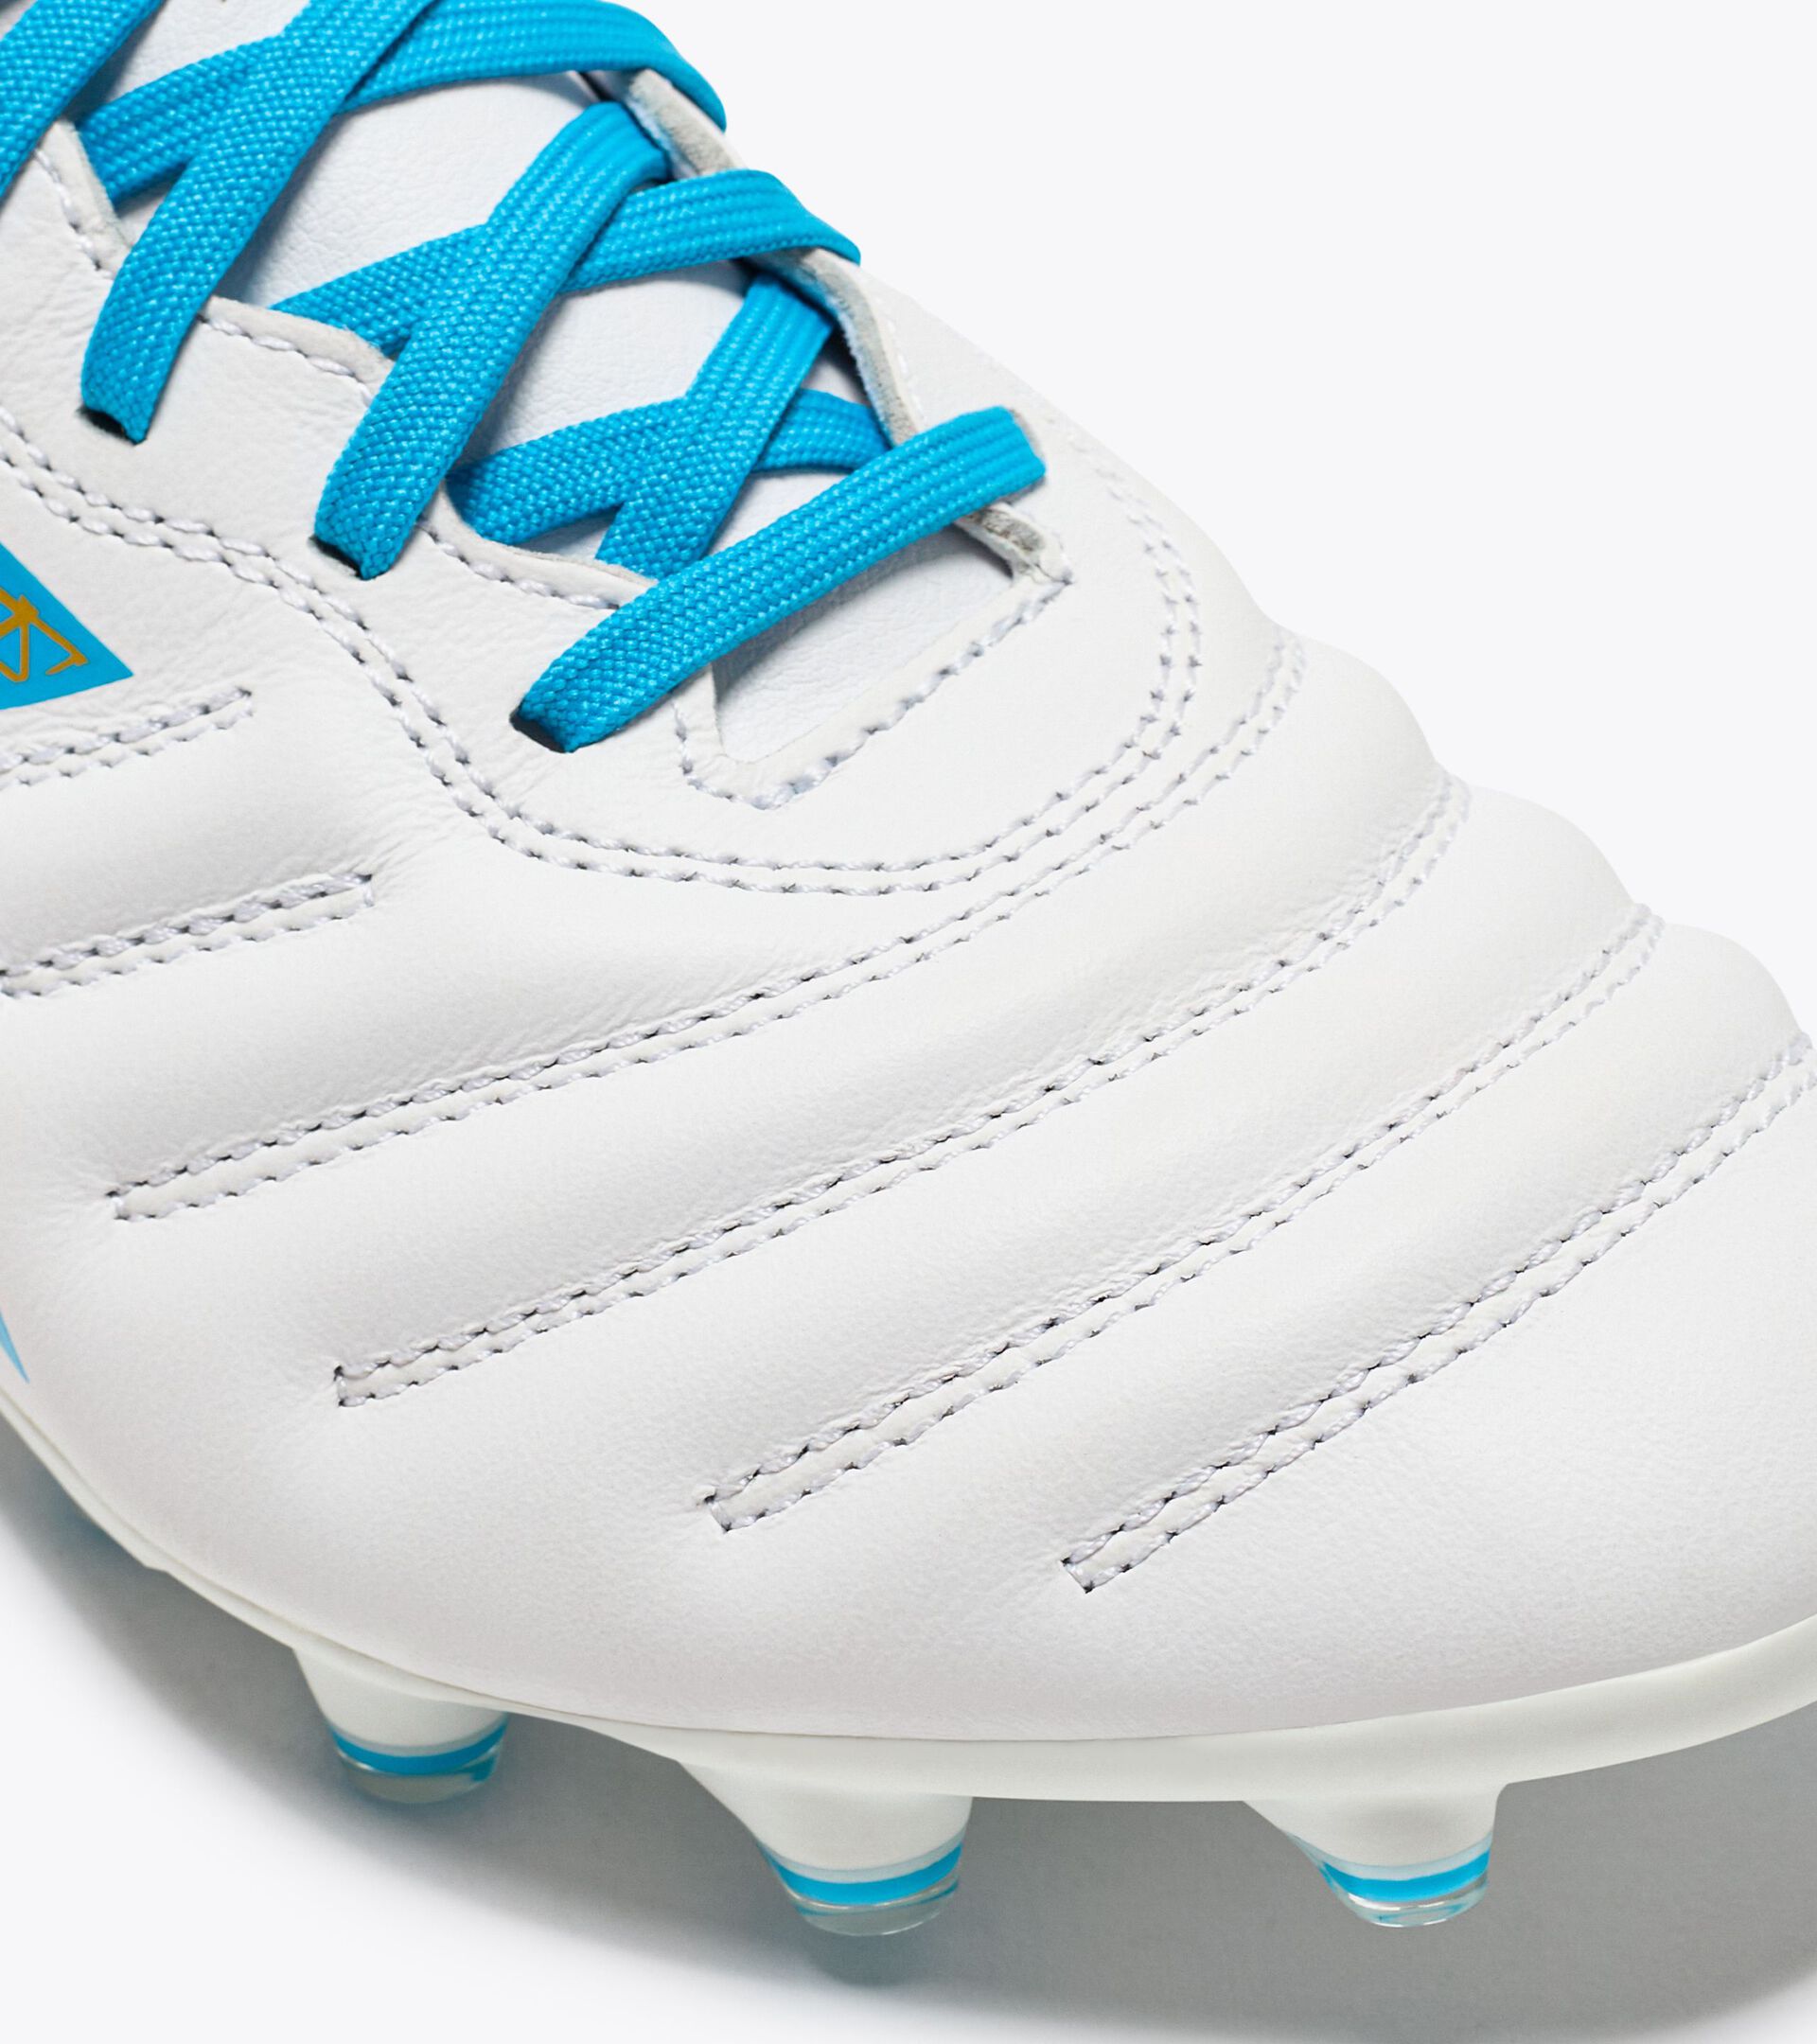 Calcio boots for firm grounds - Women  BRASIL ELITE GR LT W LP12 WHITE/BLUE FLUO/RICH GOLD - Diadora